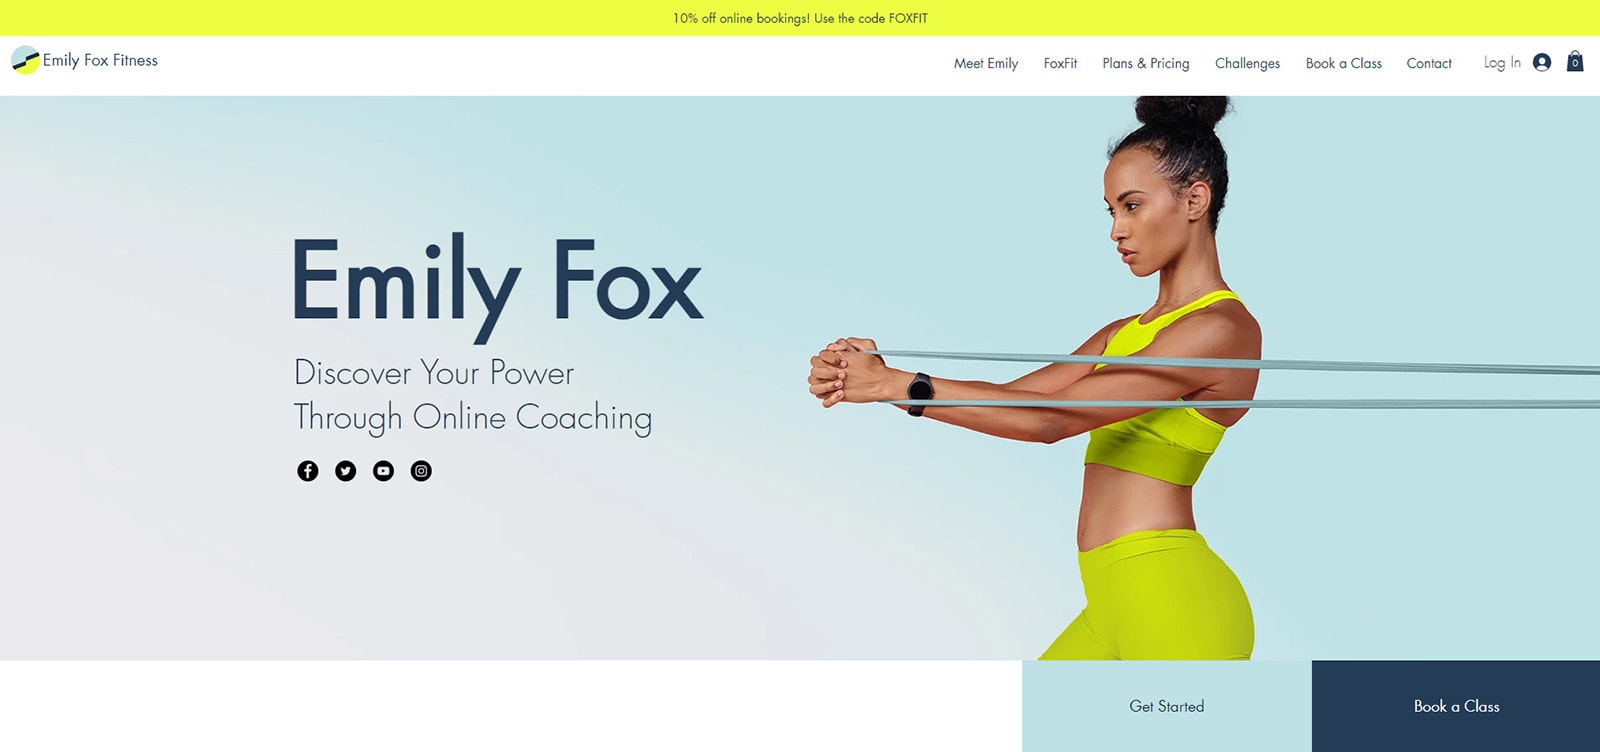 Emily Fox Fitness の写真。個人のフィットネス コーチ向けの柔軟な Wix テンプレートです。